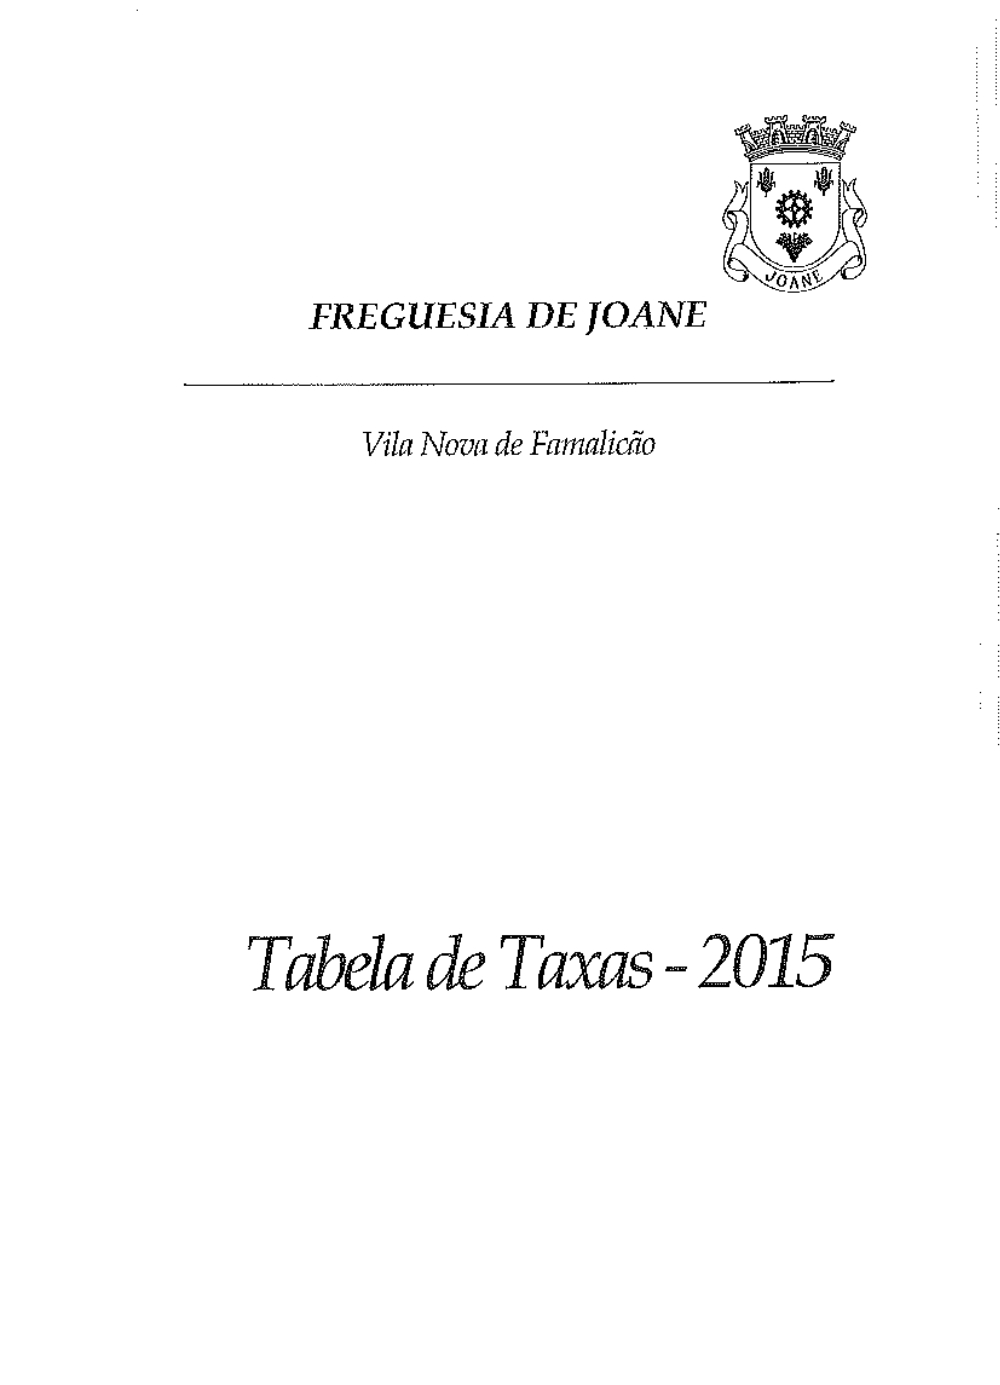 Tabelas de Taxas - 2015